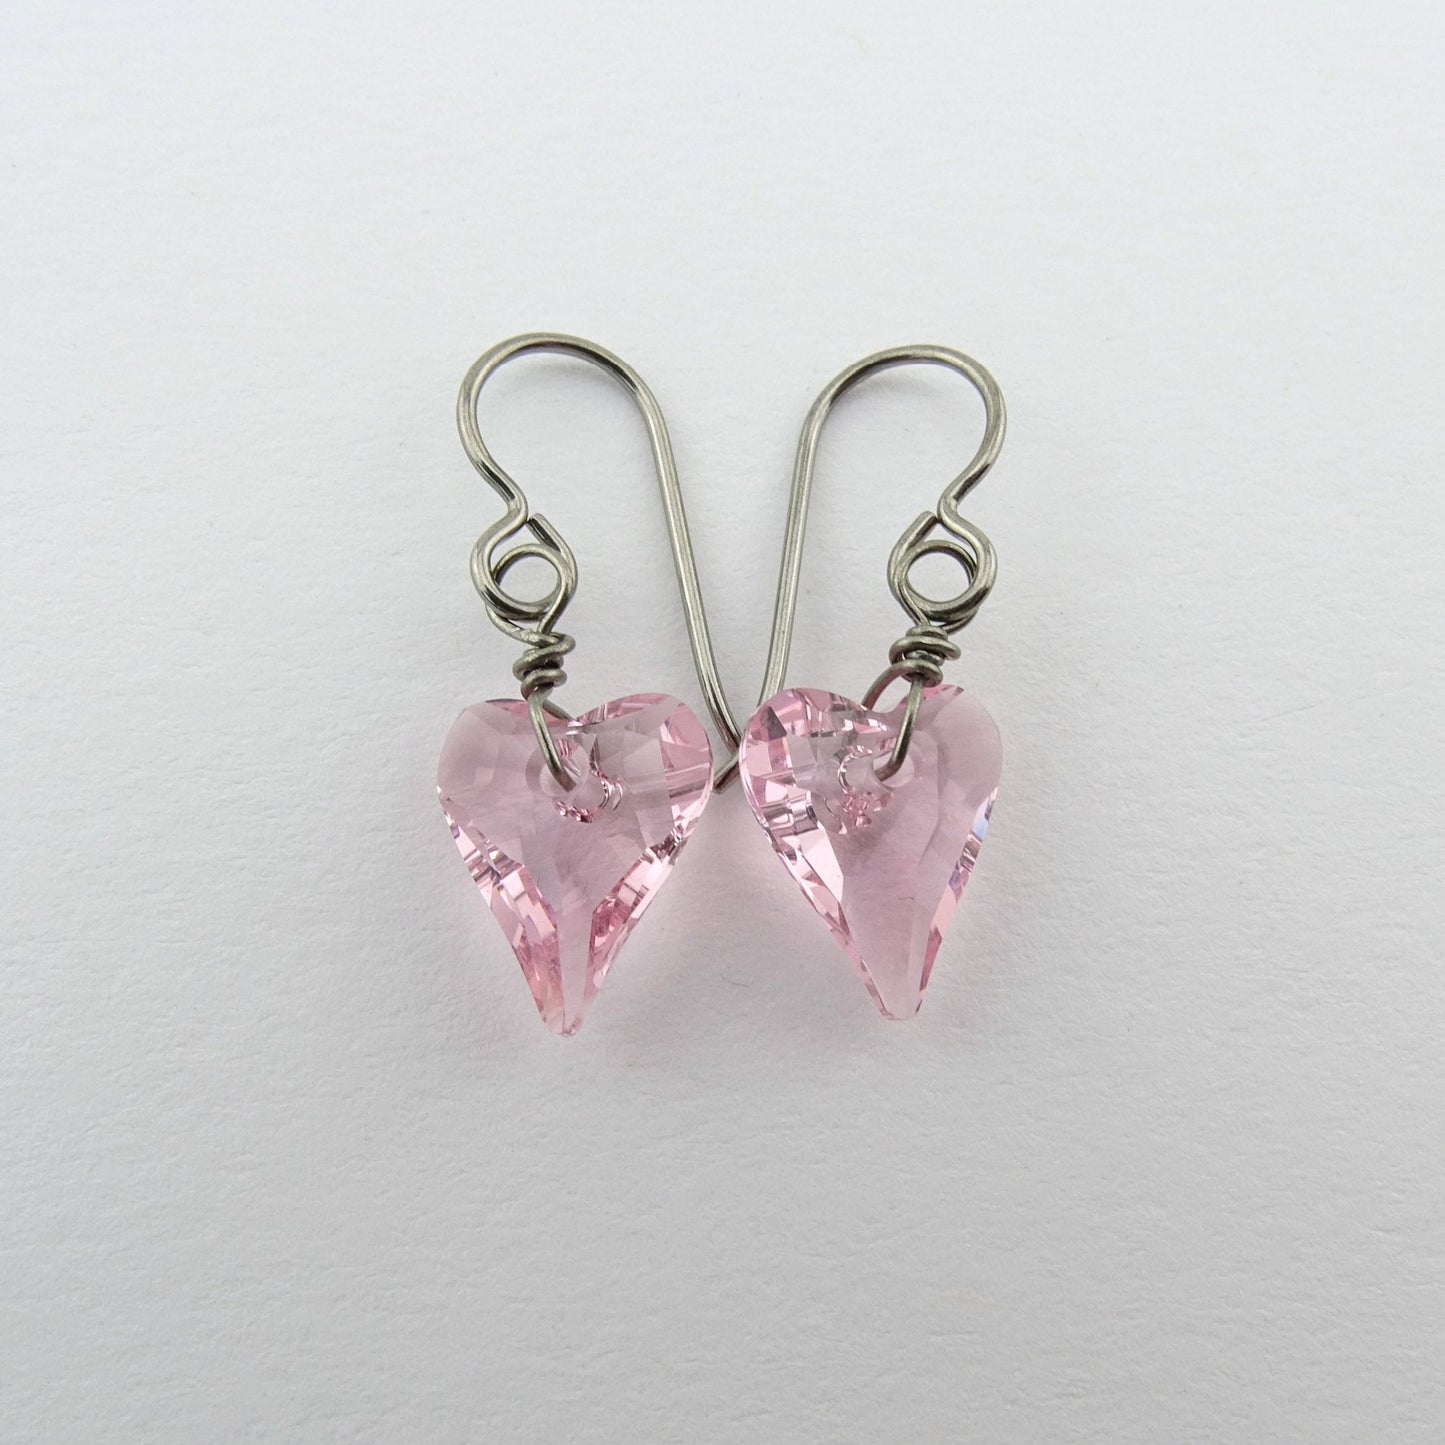 Pink Love Heart Titanium Earrings, Light Rose Heart Swarovski Crystal, Hypoallergenic Nickel Free Niobium Earrings for Sensitive Ears